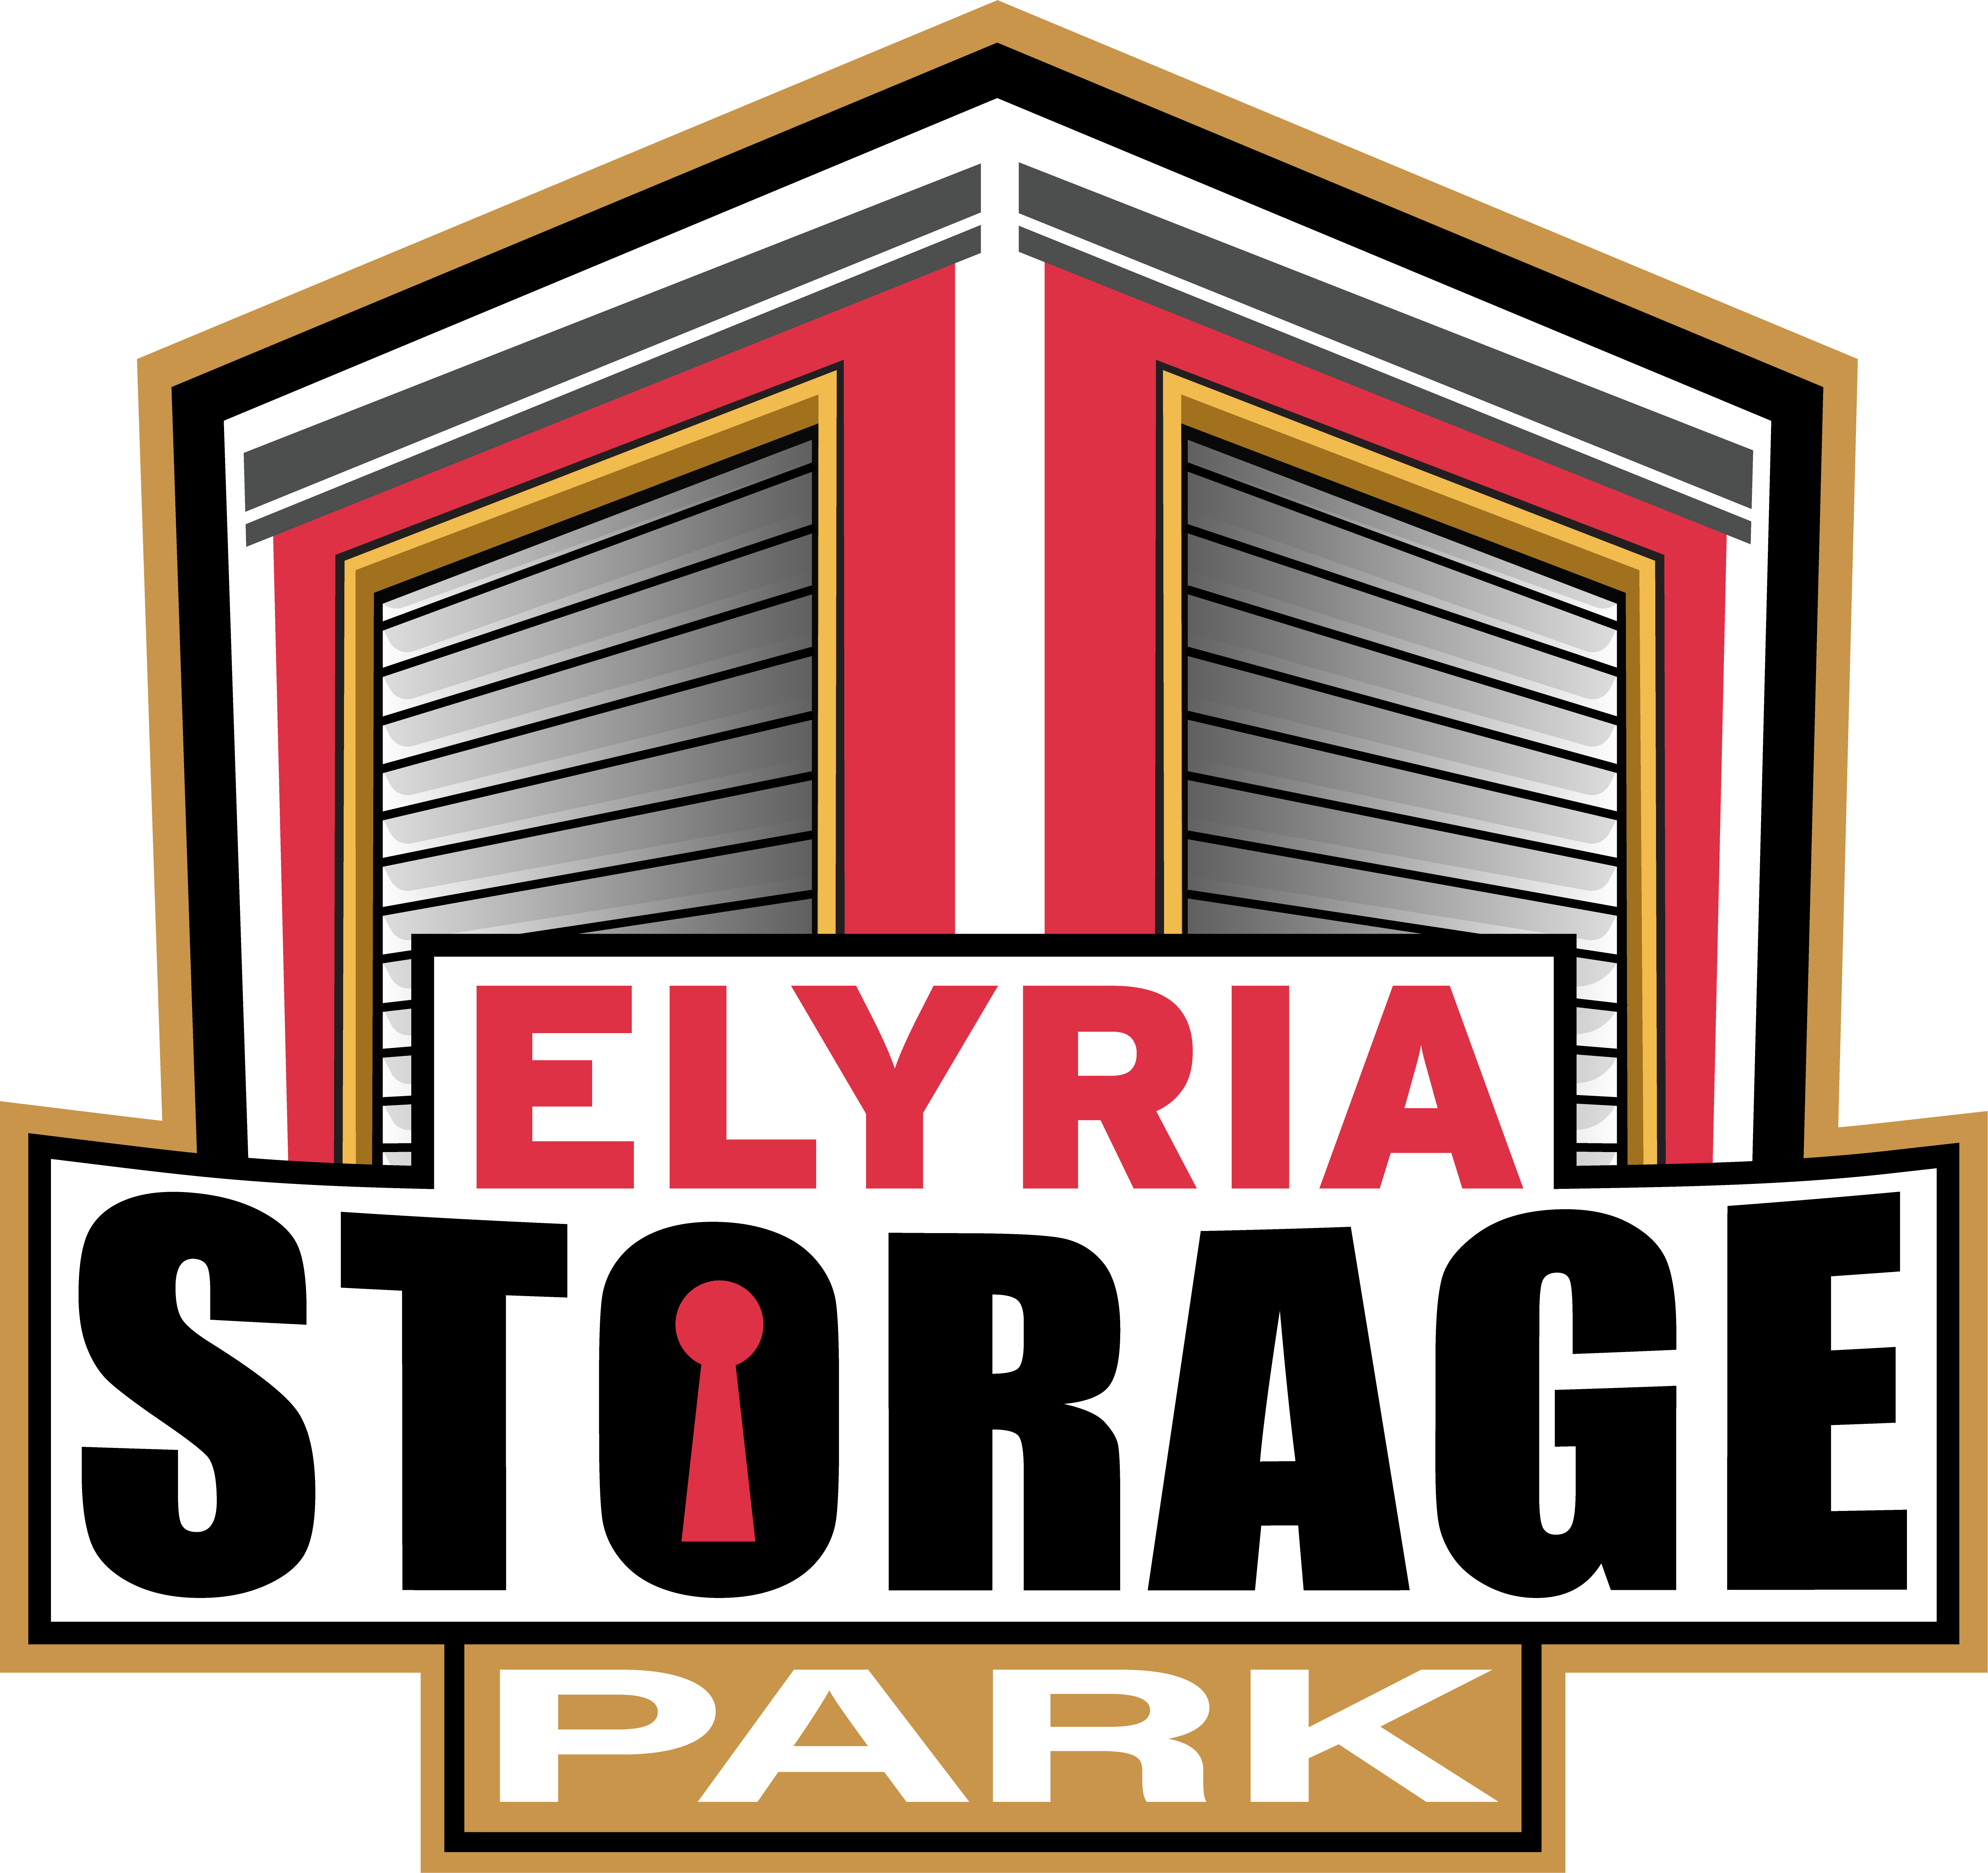 Elyria Storage Park